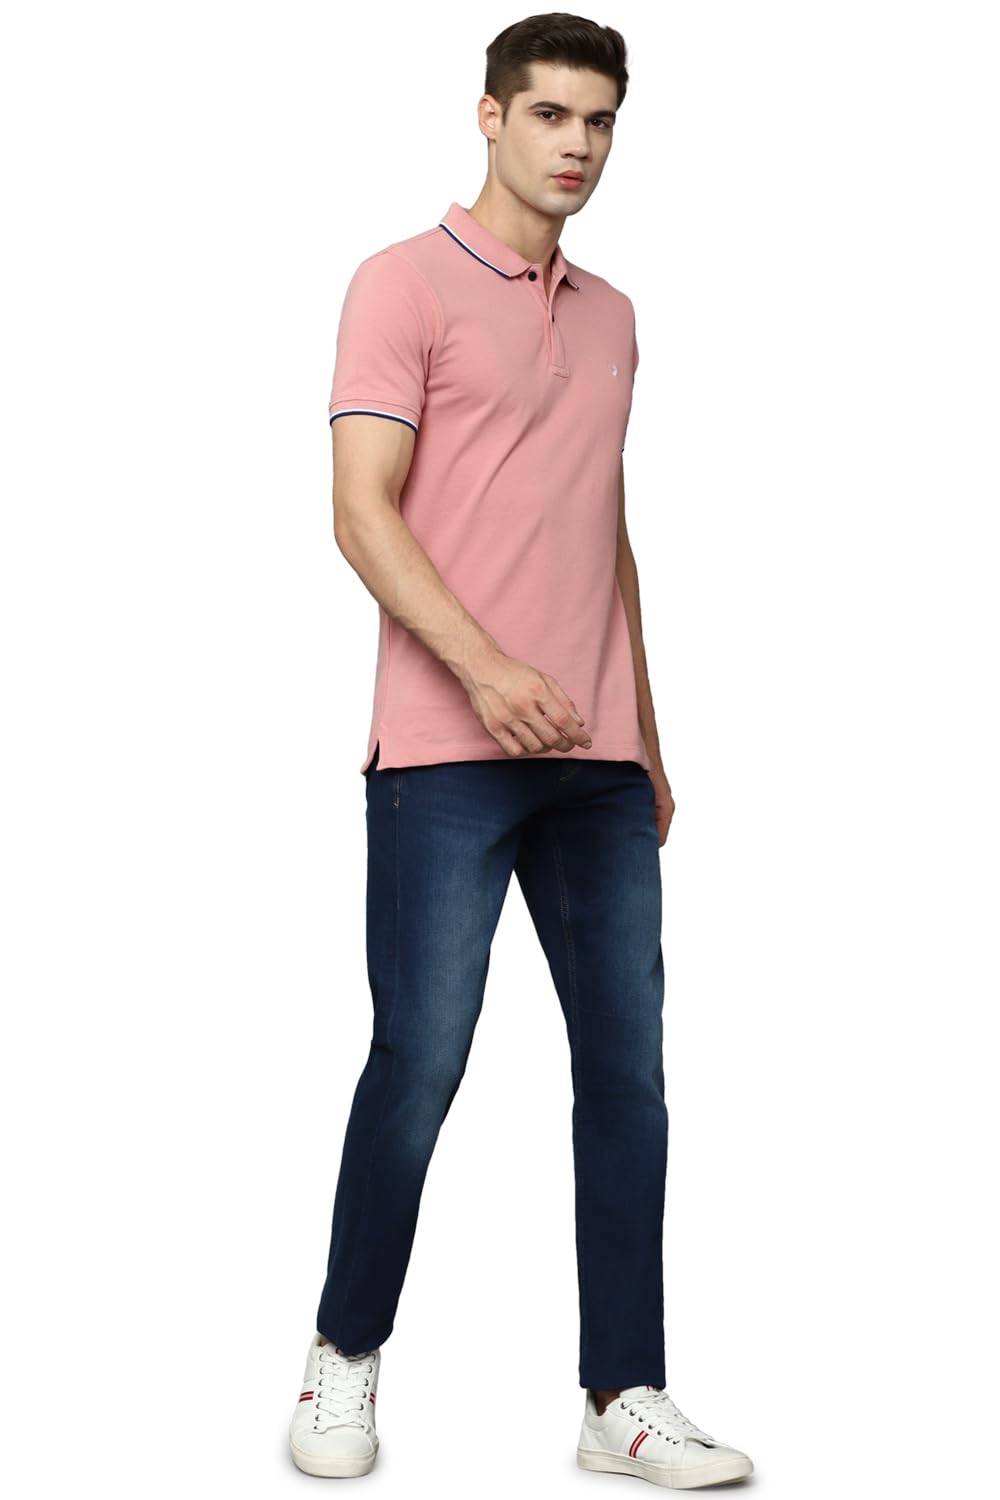 Allen Solly Men's Regular Fit T-Shirt (ASKPCURGF479080_Pink L)